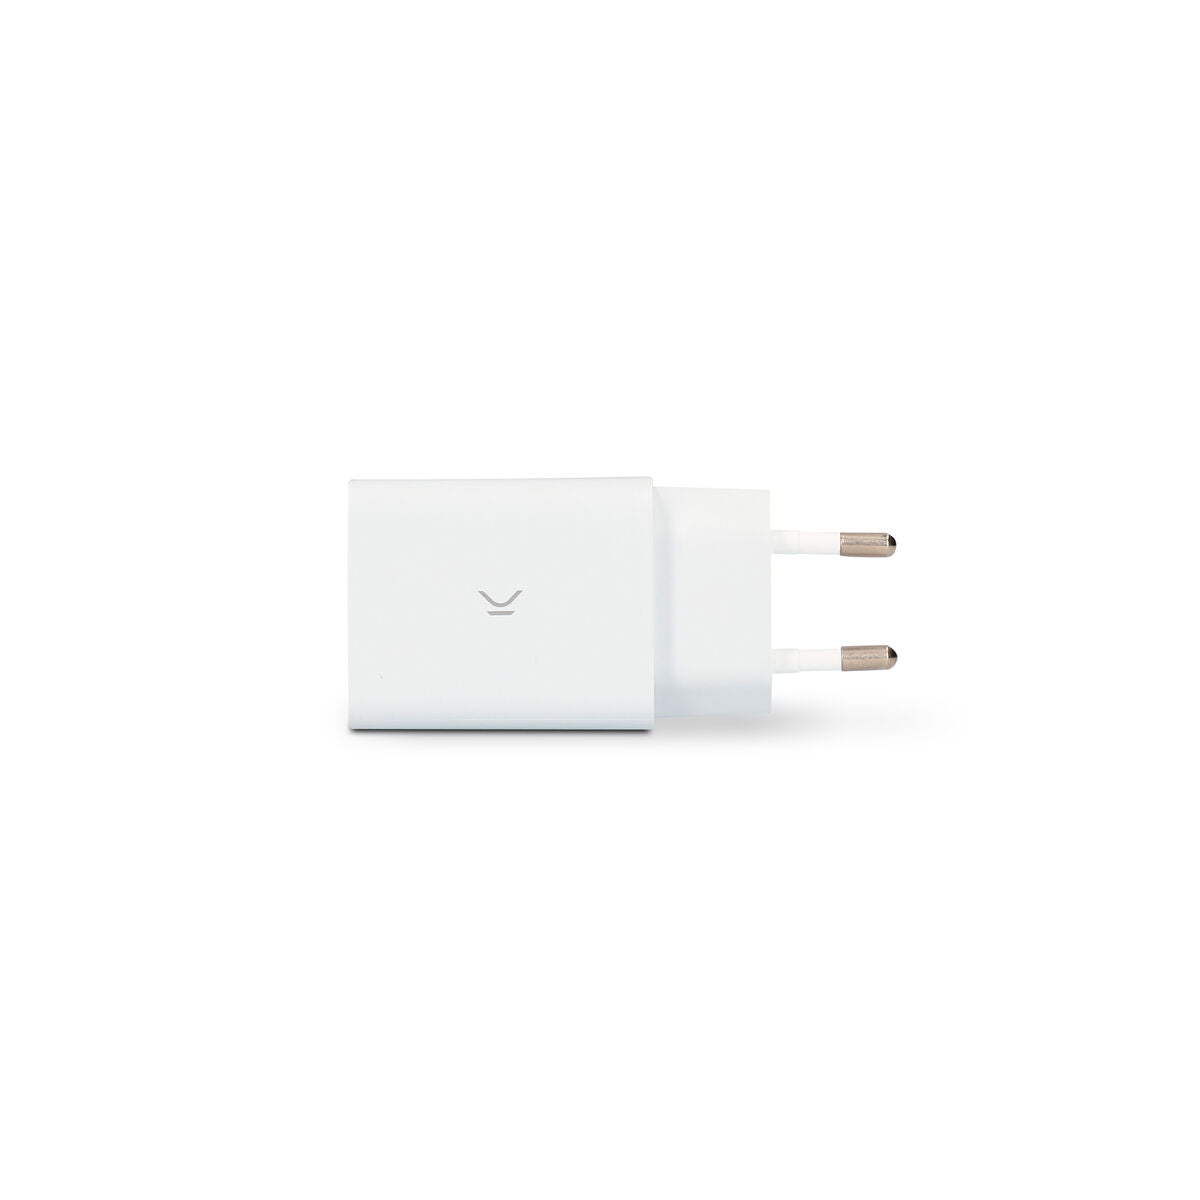 Cargador de Pared +Cable Lightning MFI KSIX Apple-compatible 2.4A USB iPhone